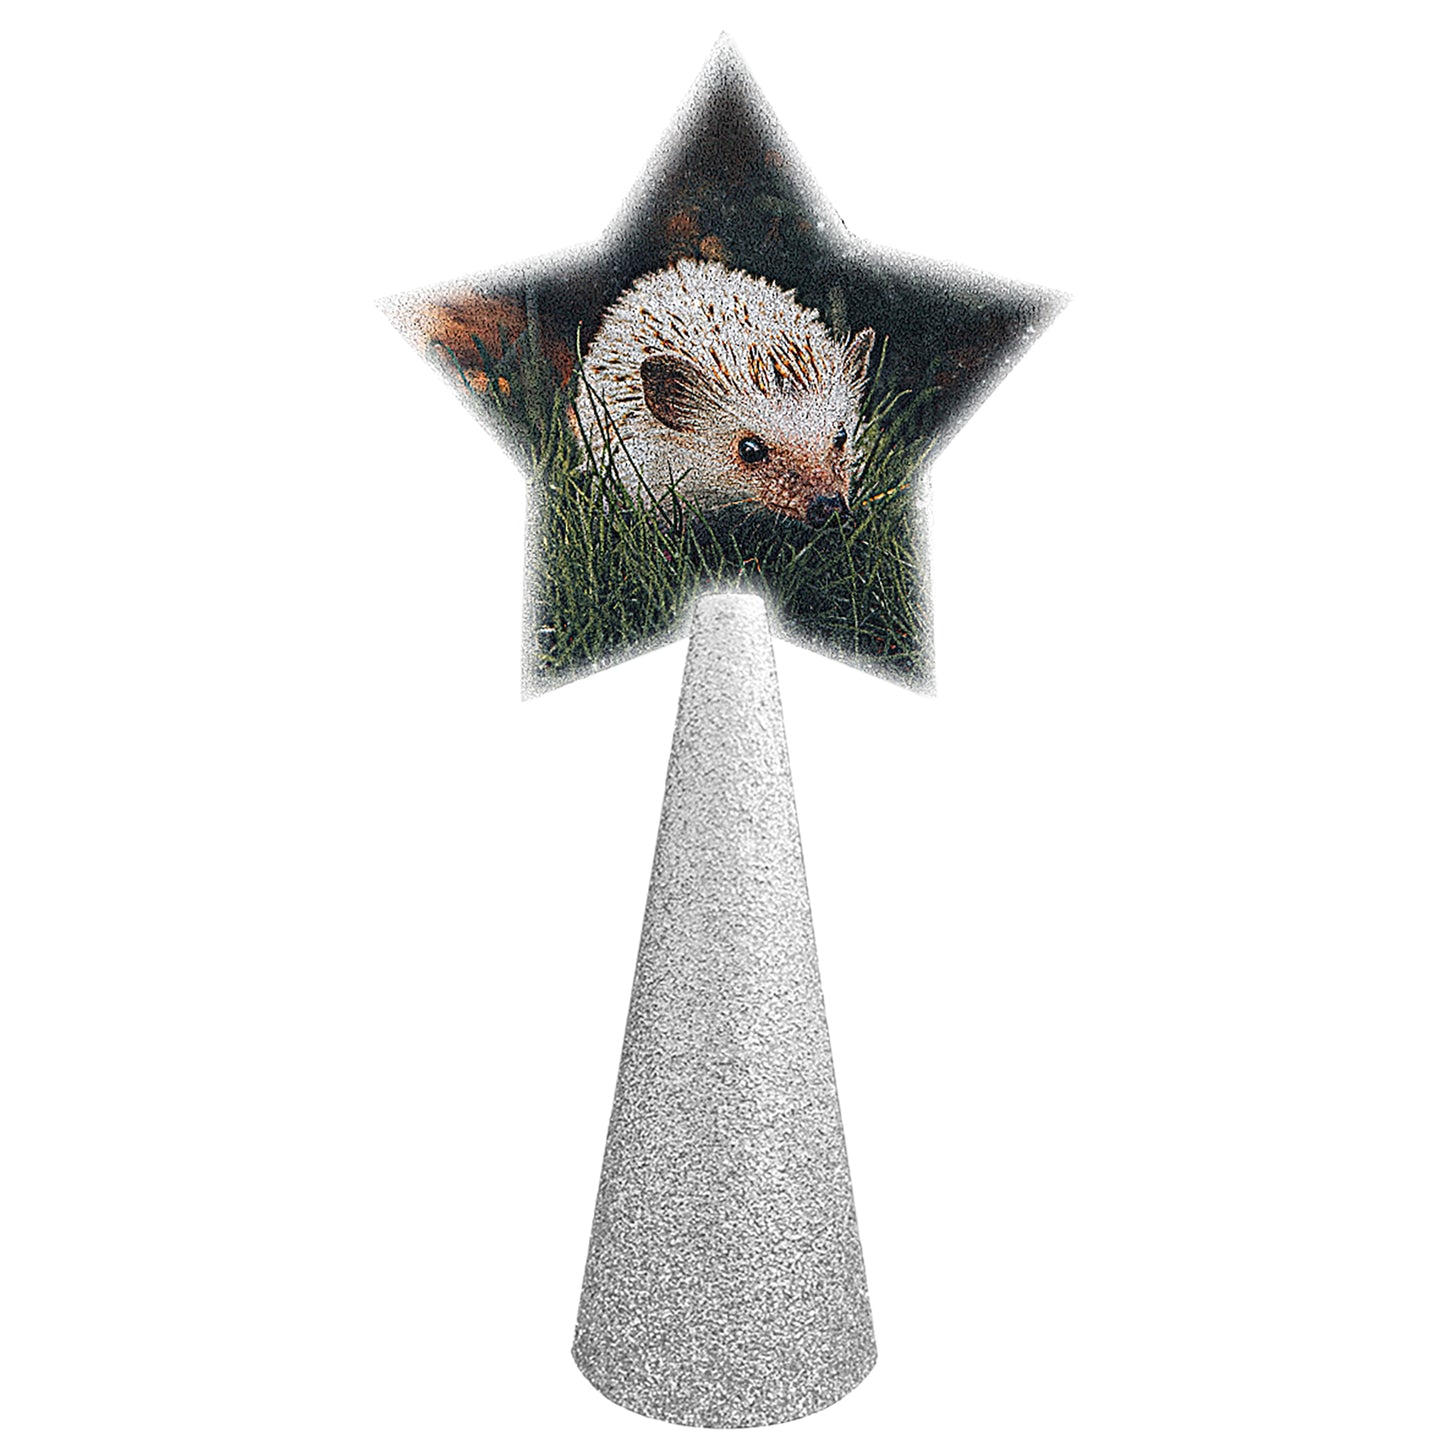 Cute hedgehog - sample custom christmas tree topper - star photo on silver glitter cone